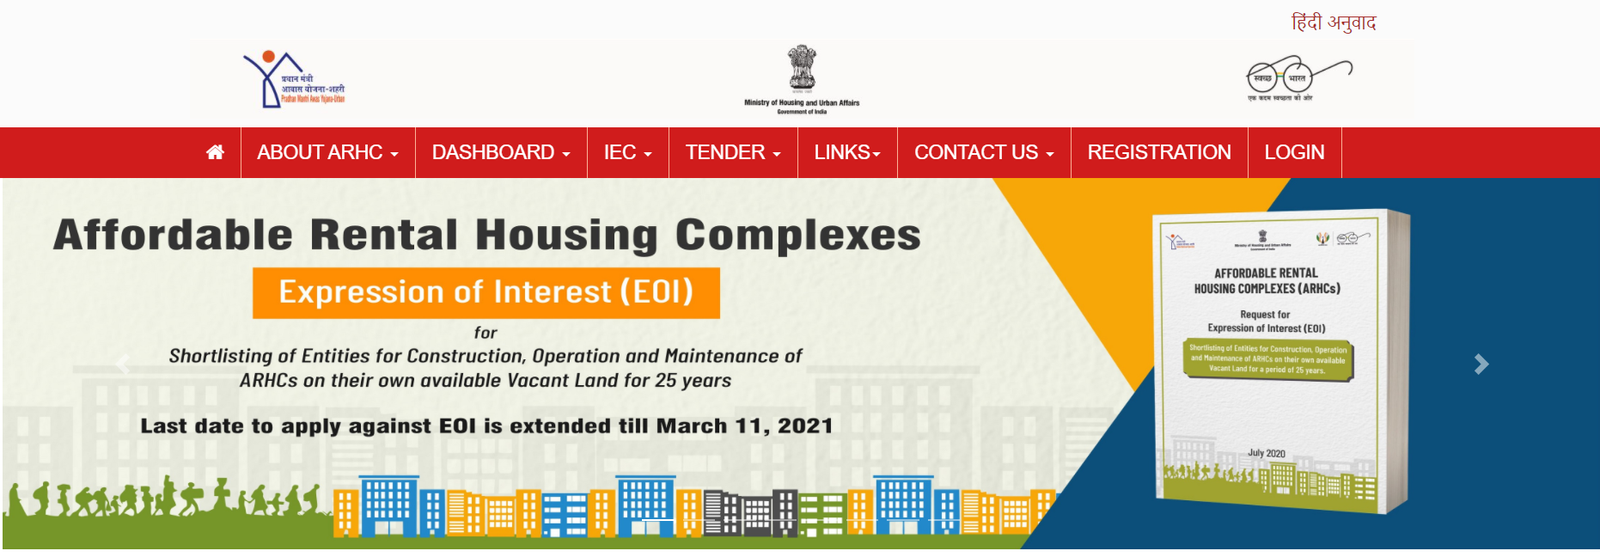 Affordable rental housing scheme 2021 Apply Online @ arhc.mohua.gov.in